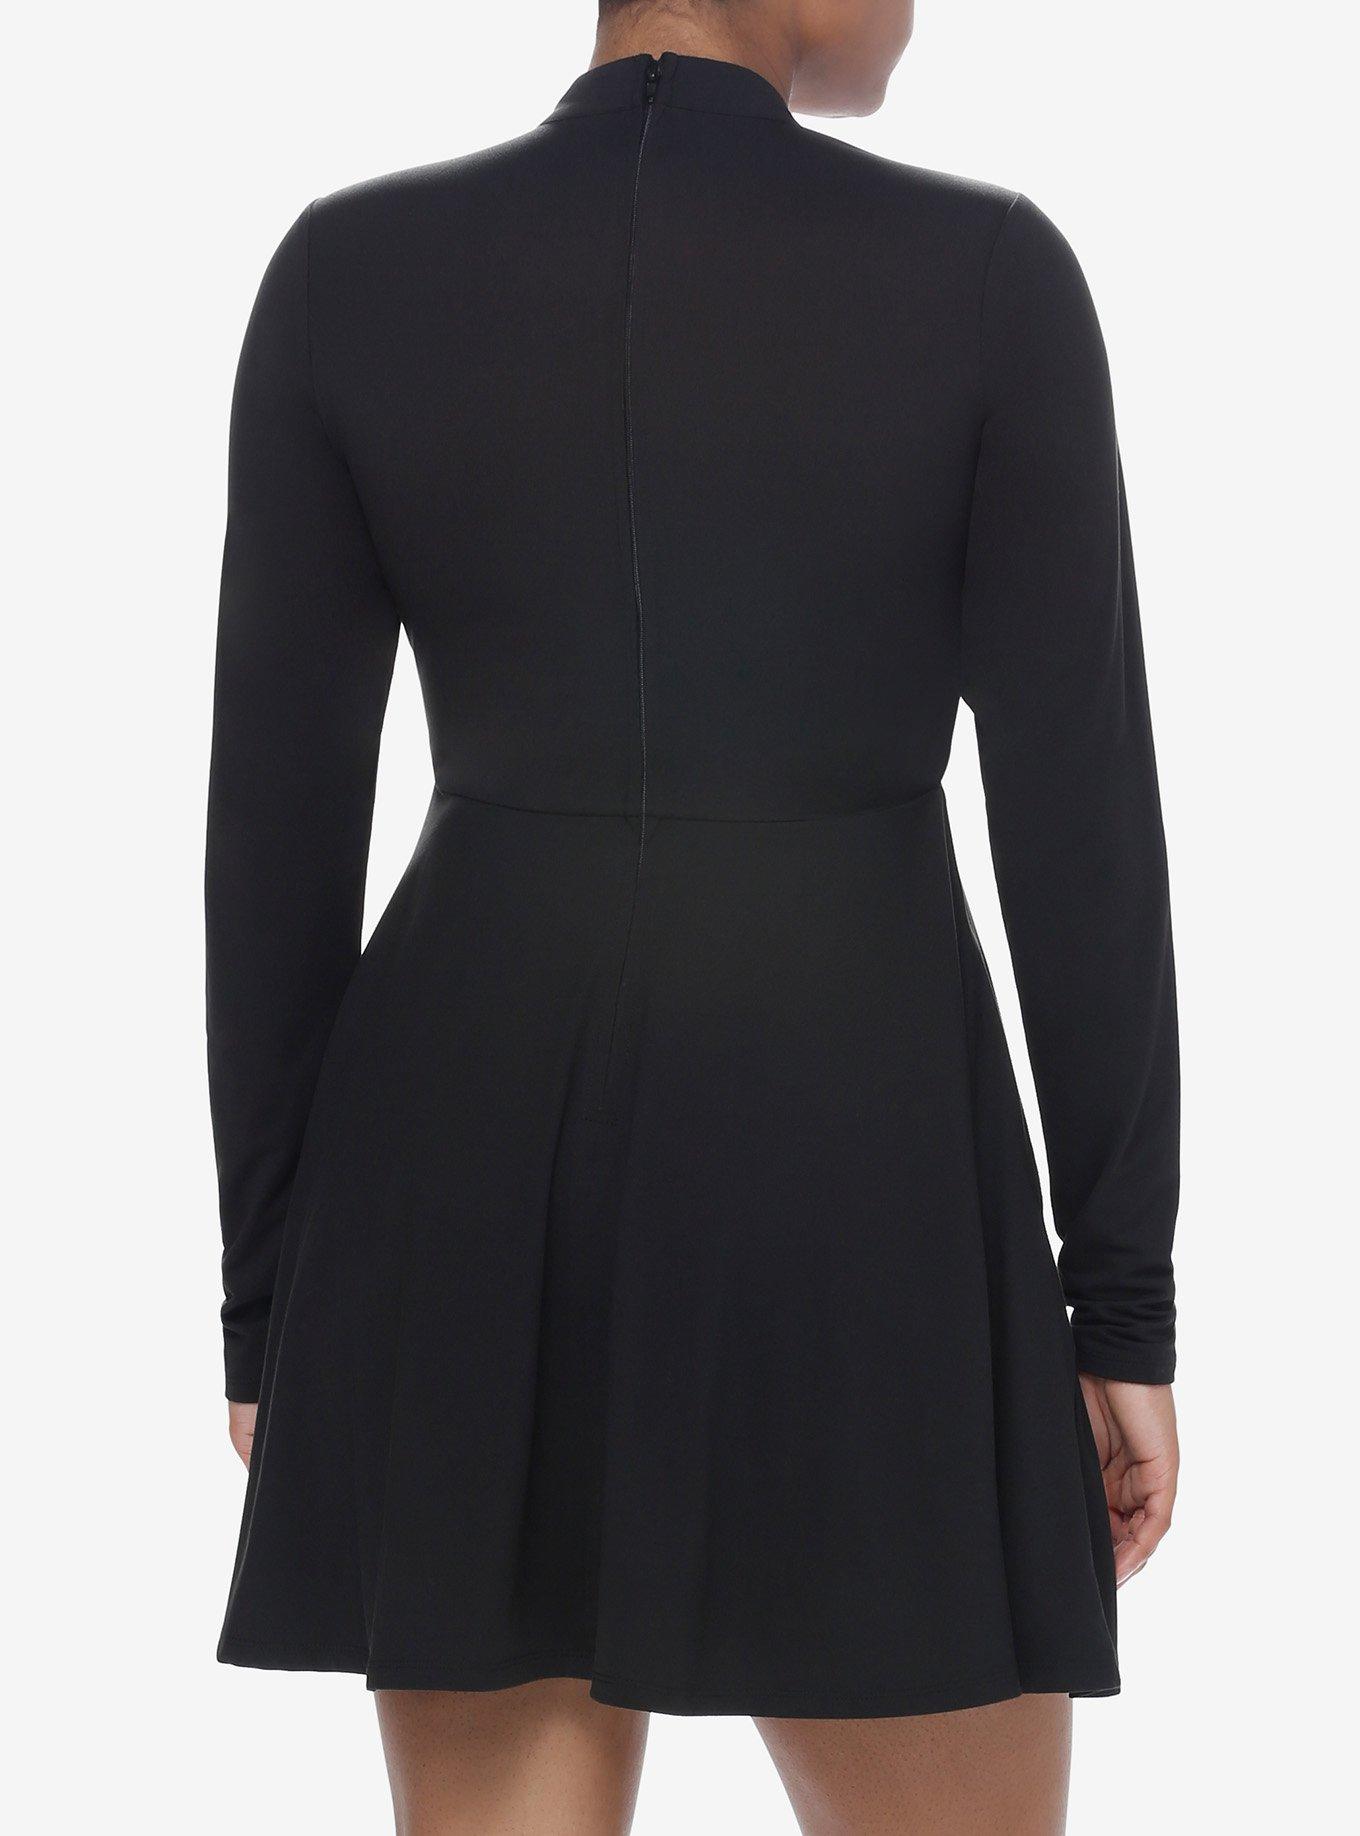 Cosmic Aura Black Cutout Mock Neck Long-Sleeve Dress, BLACK, alternate